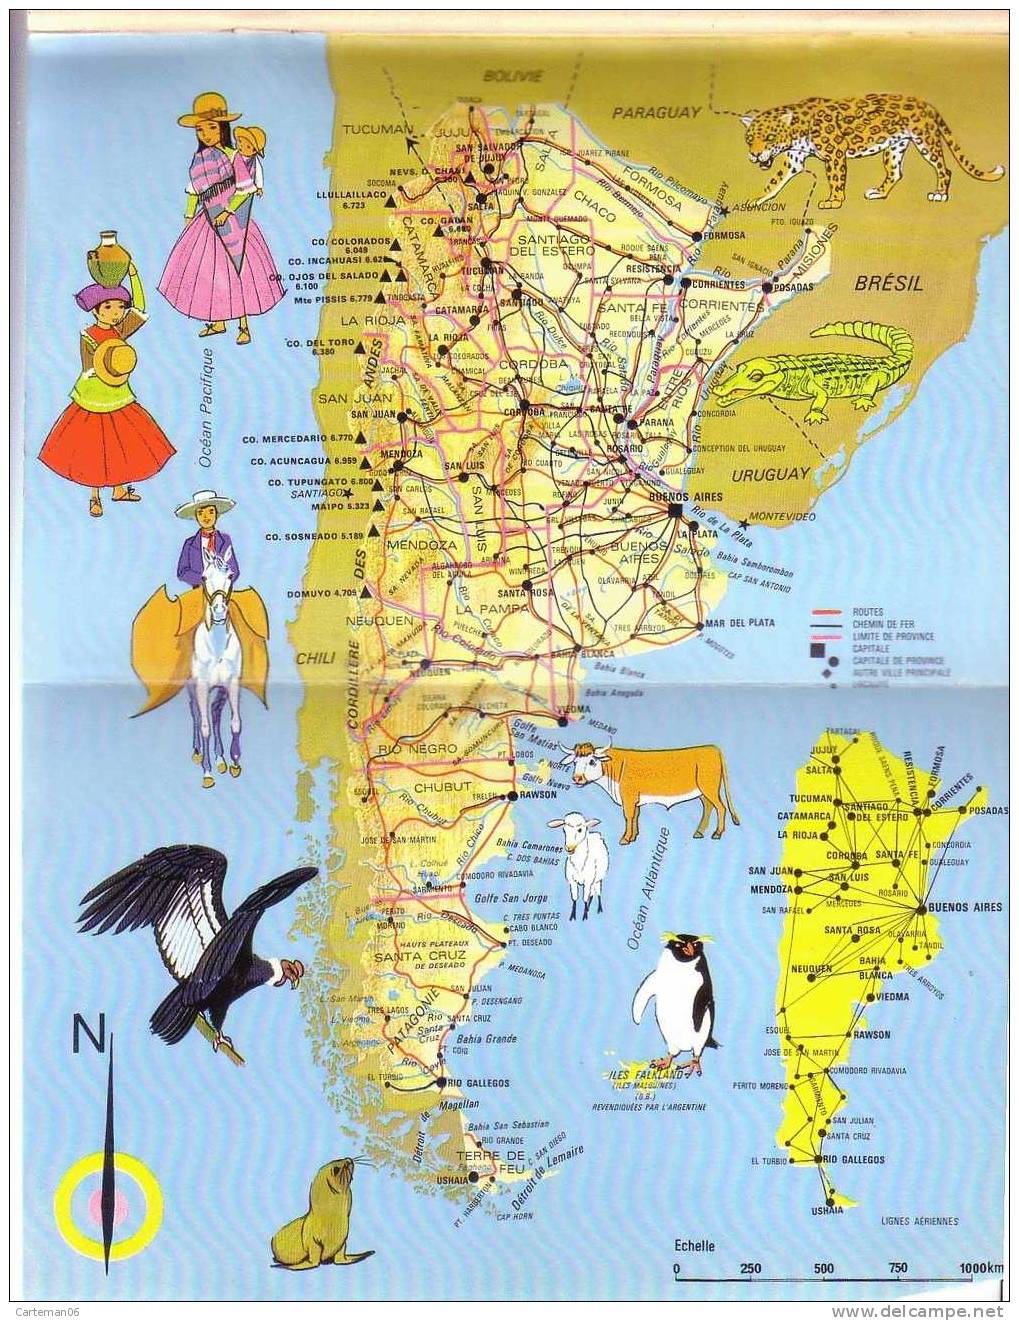 Livre - Tour du Monde - Argentine (Buenos Aires, Salta, Terre de feu, Catamarca, Tucuman, Bahia Blanco, Castillo, Peron)